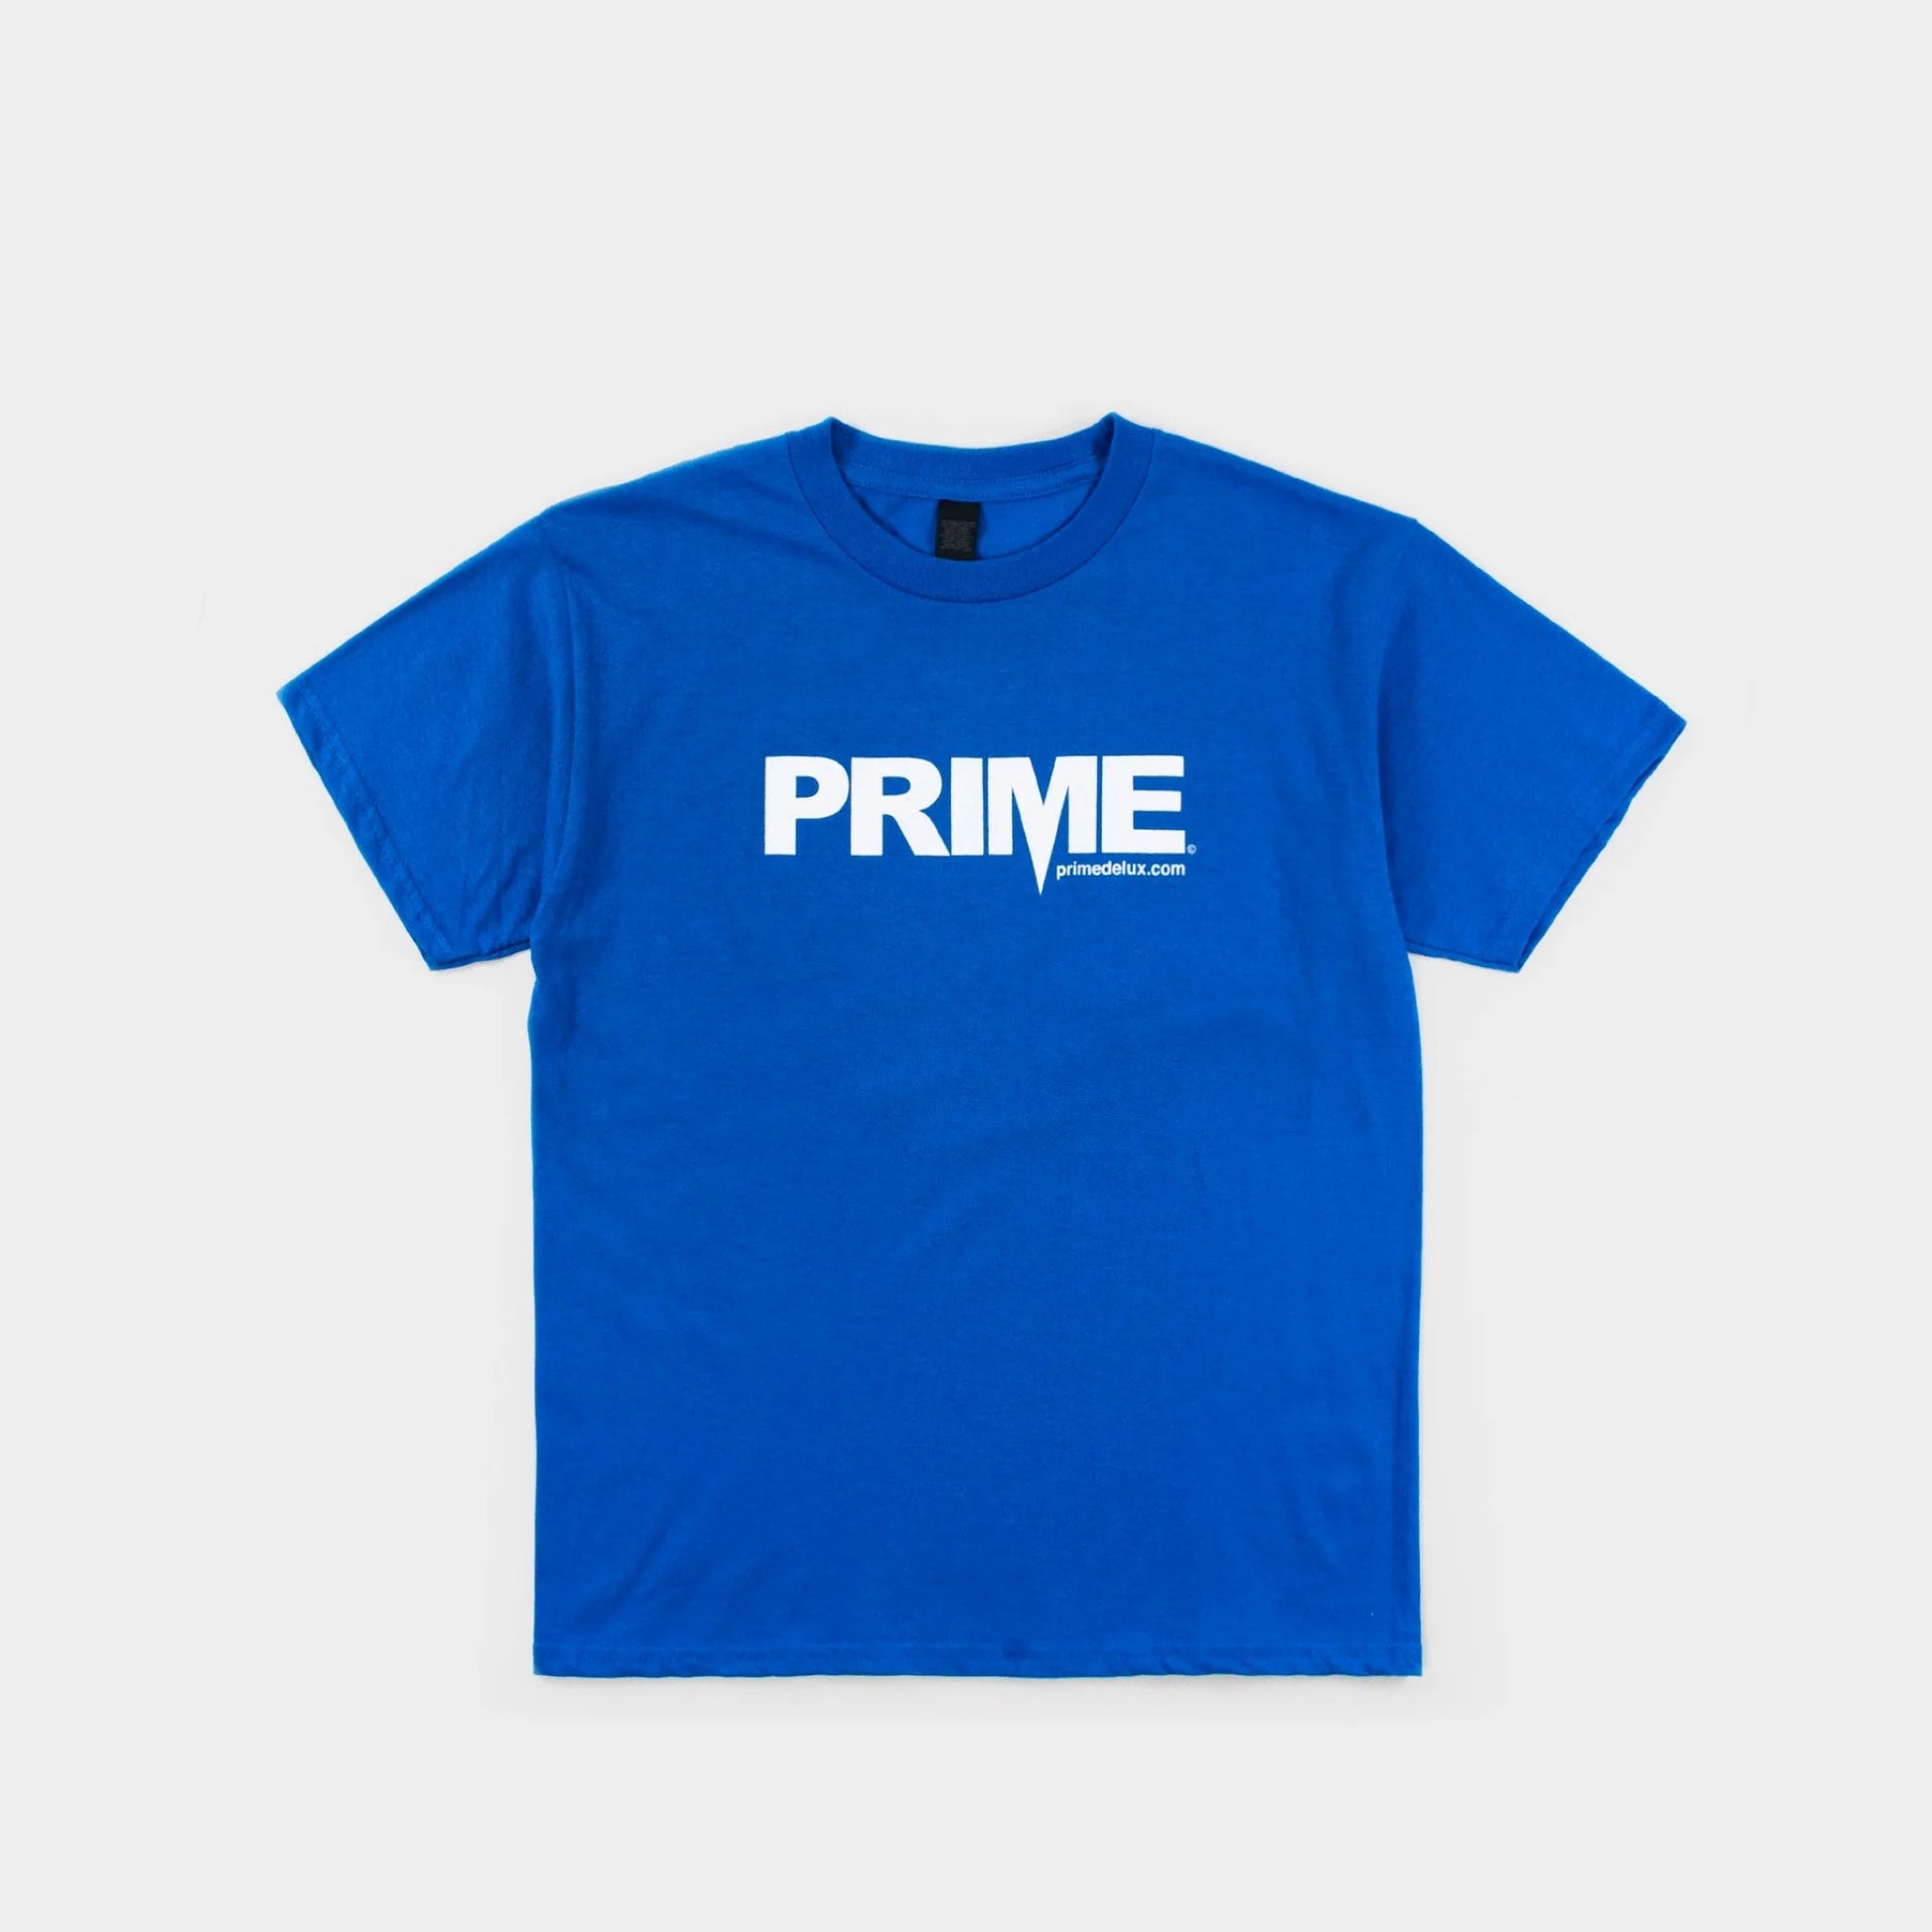 Prime Delux OG Logo Kids T Shirt - Royal Blue/ White - Prime Delux Store